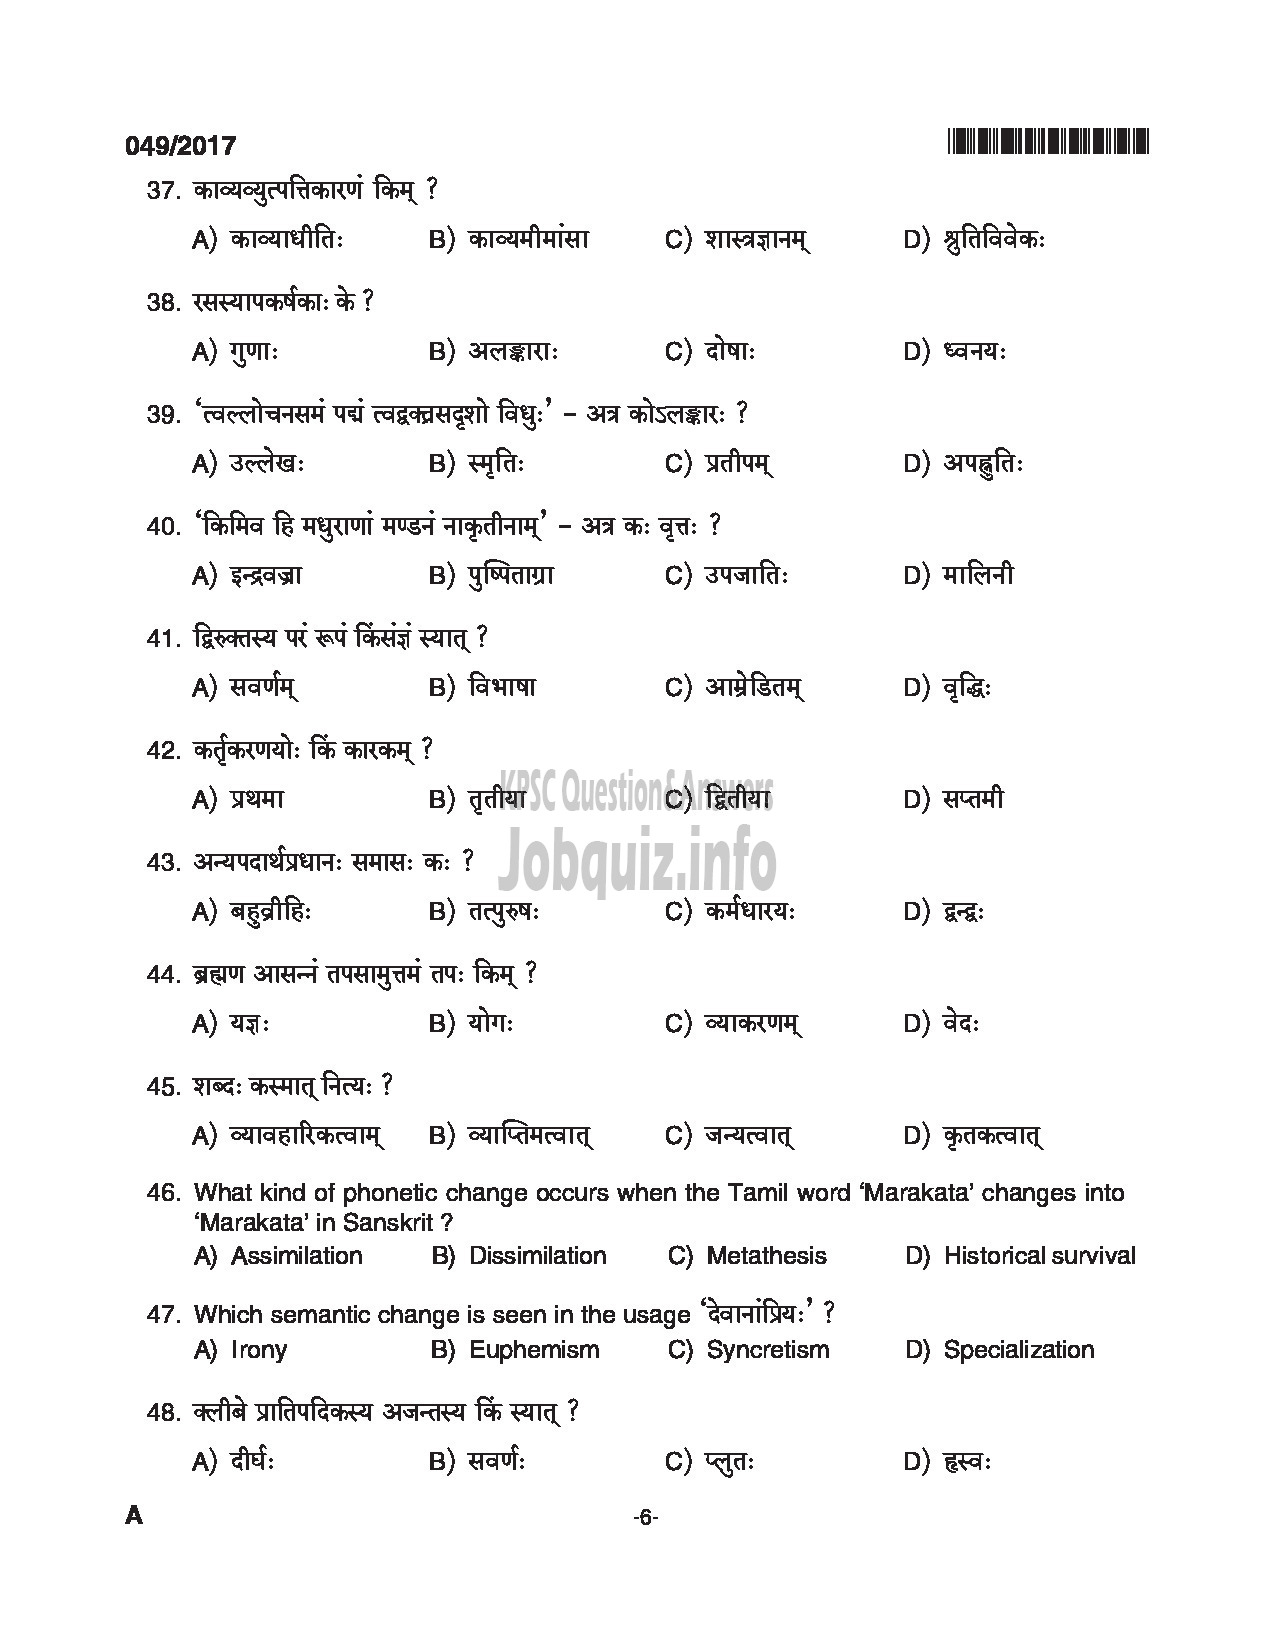 Kerala PSC Question Paper - LECTURER IN SANSKRIT GENERAL COLLEGIATE EDN 133/2015-6